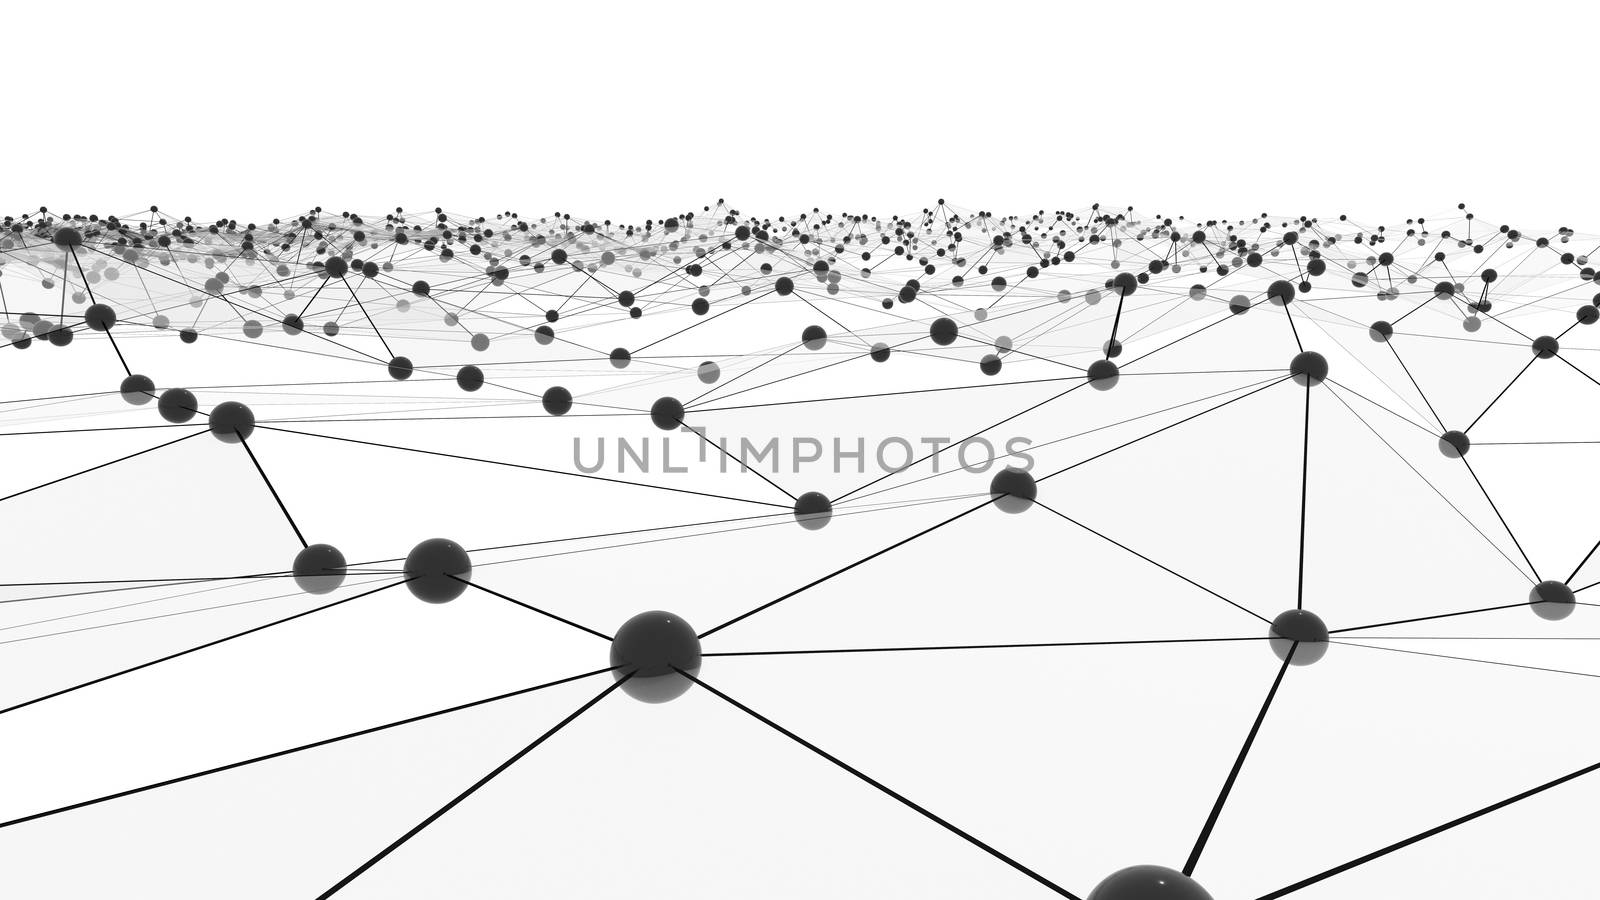 Concept of Network or Internet Communication. 3d illustration. White background